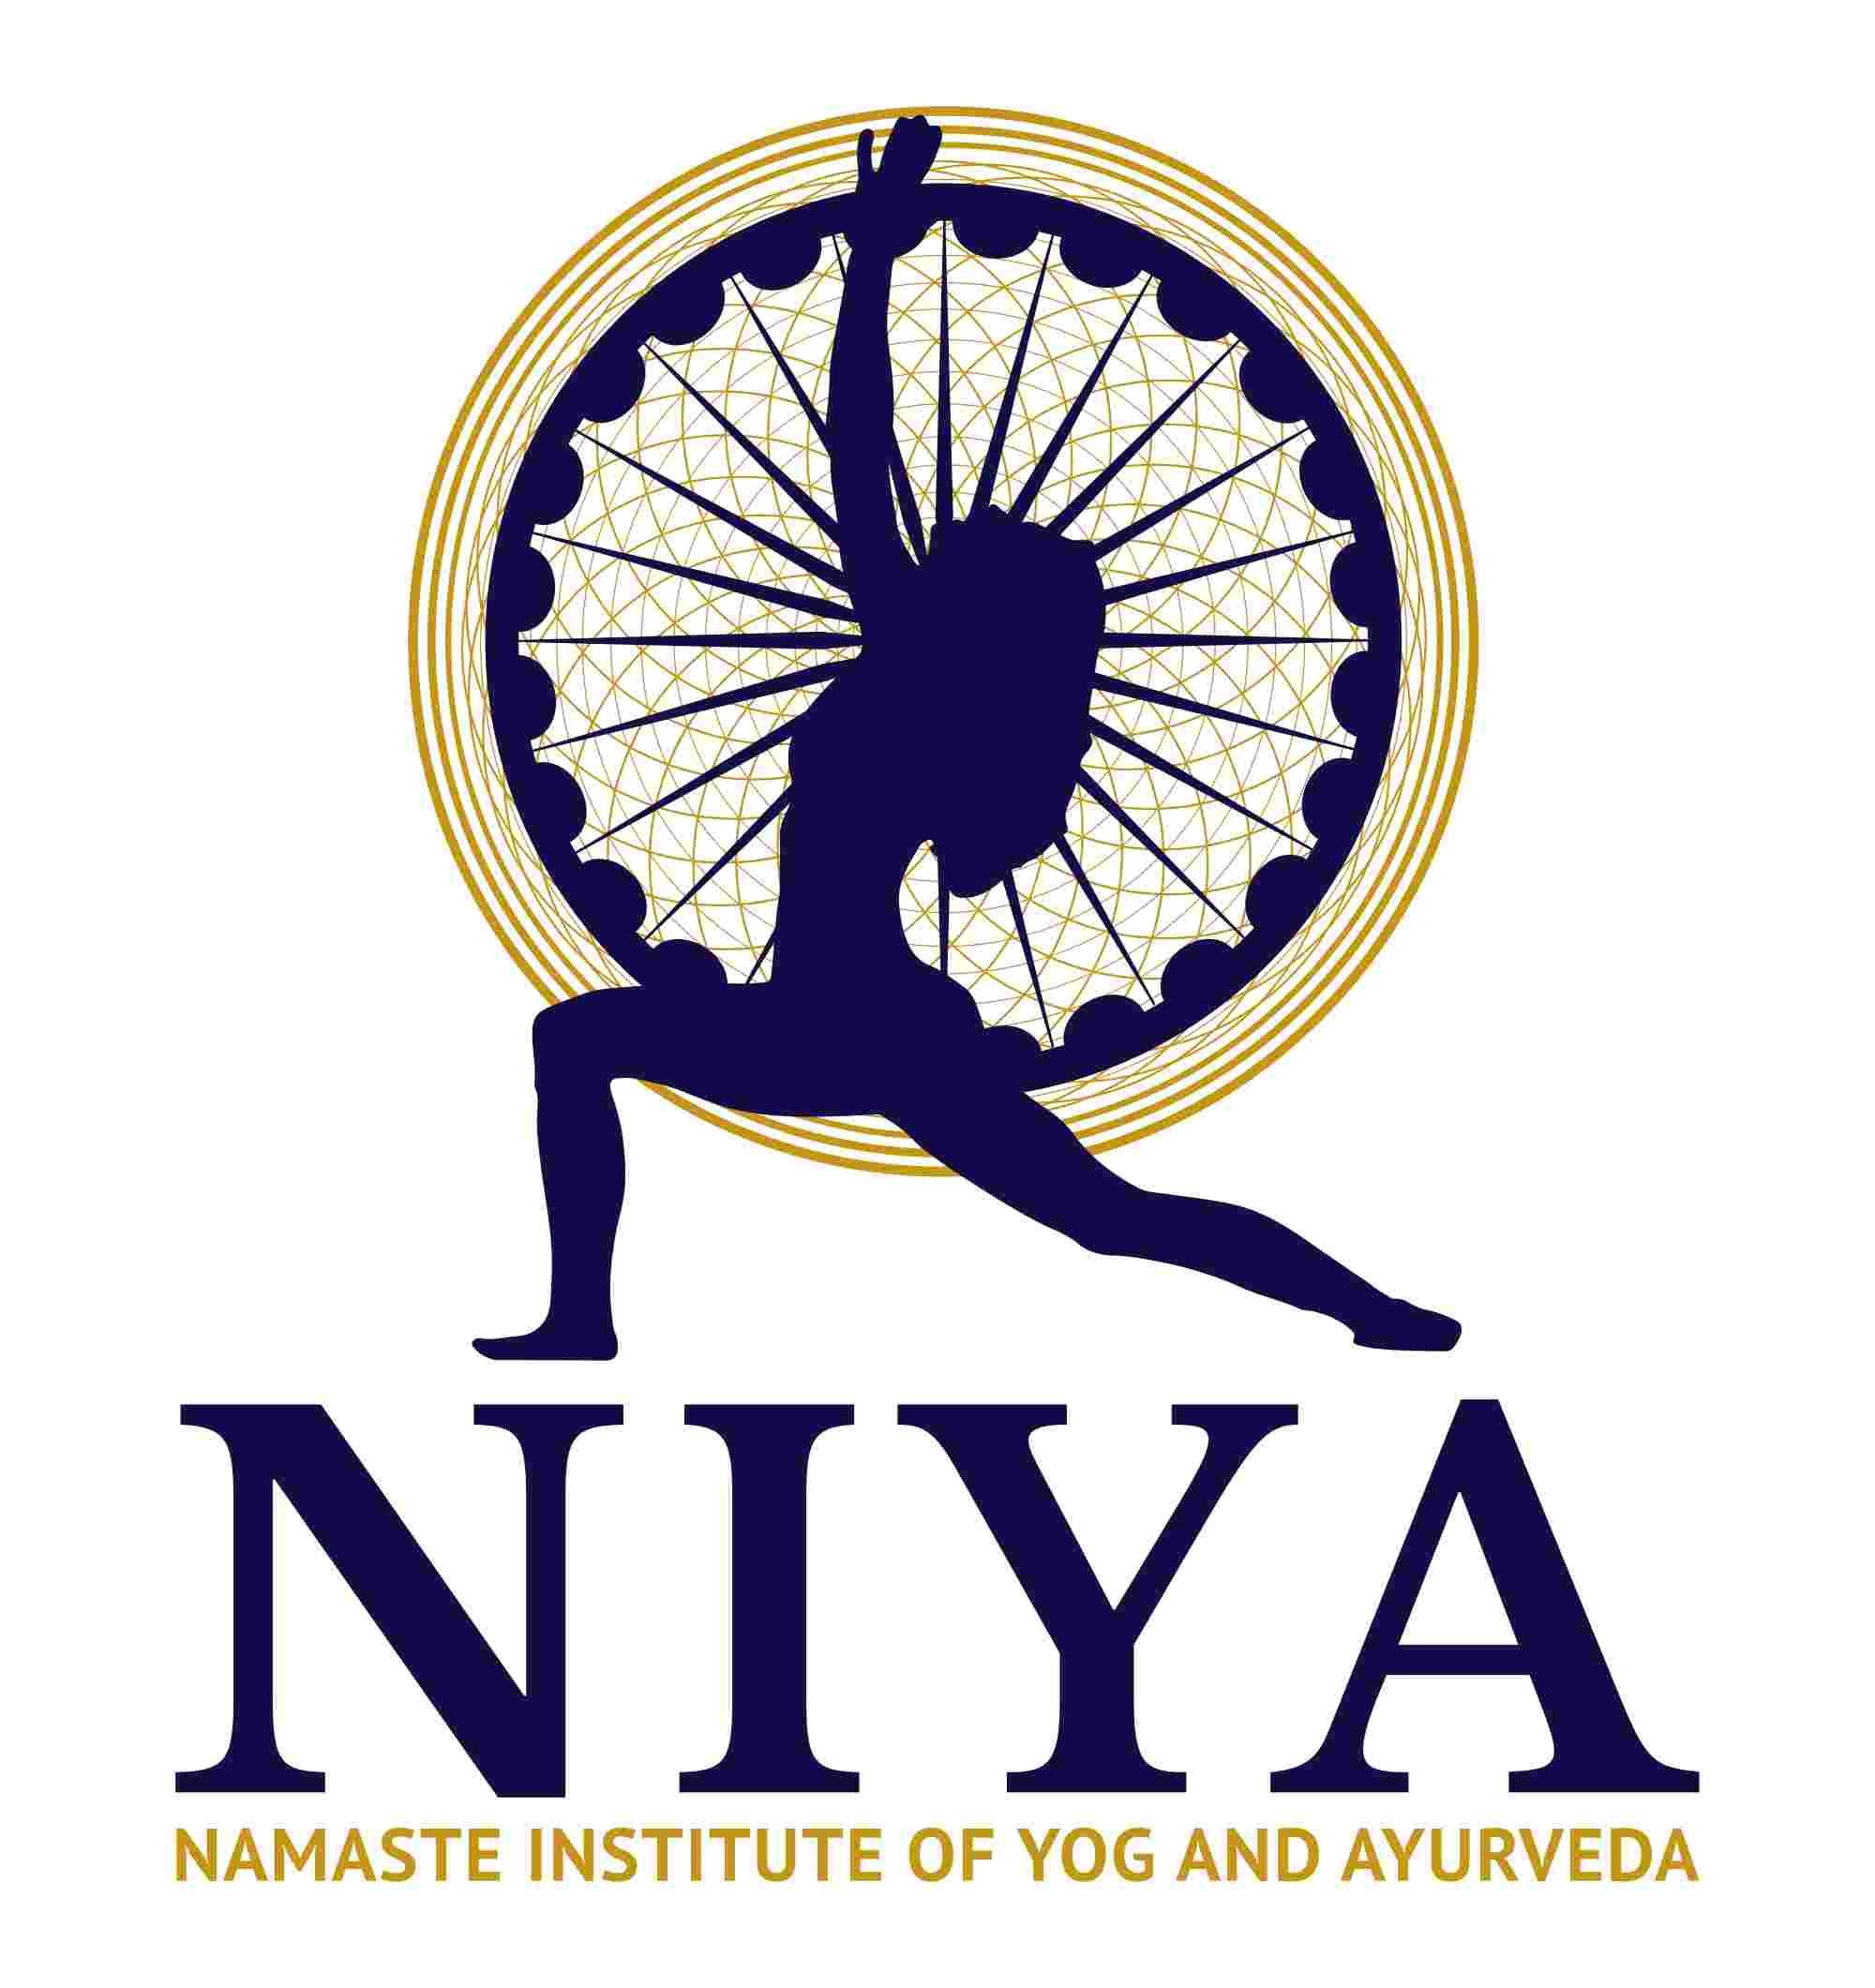 NAMASTE INSTITUTE OF YOG AND AYURVEDA logo